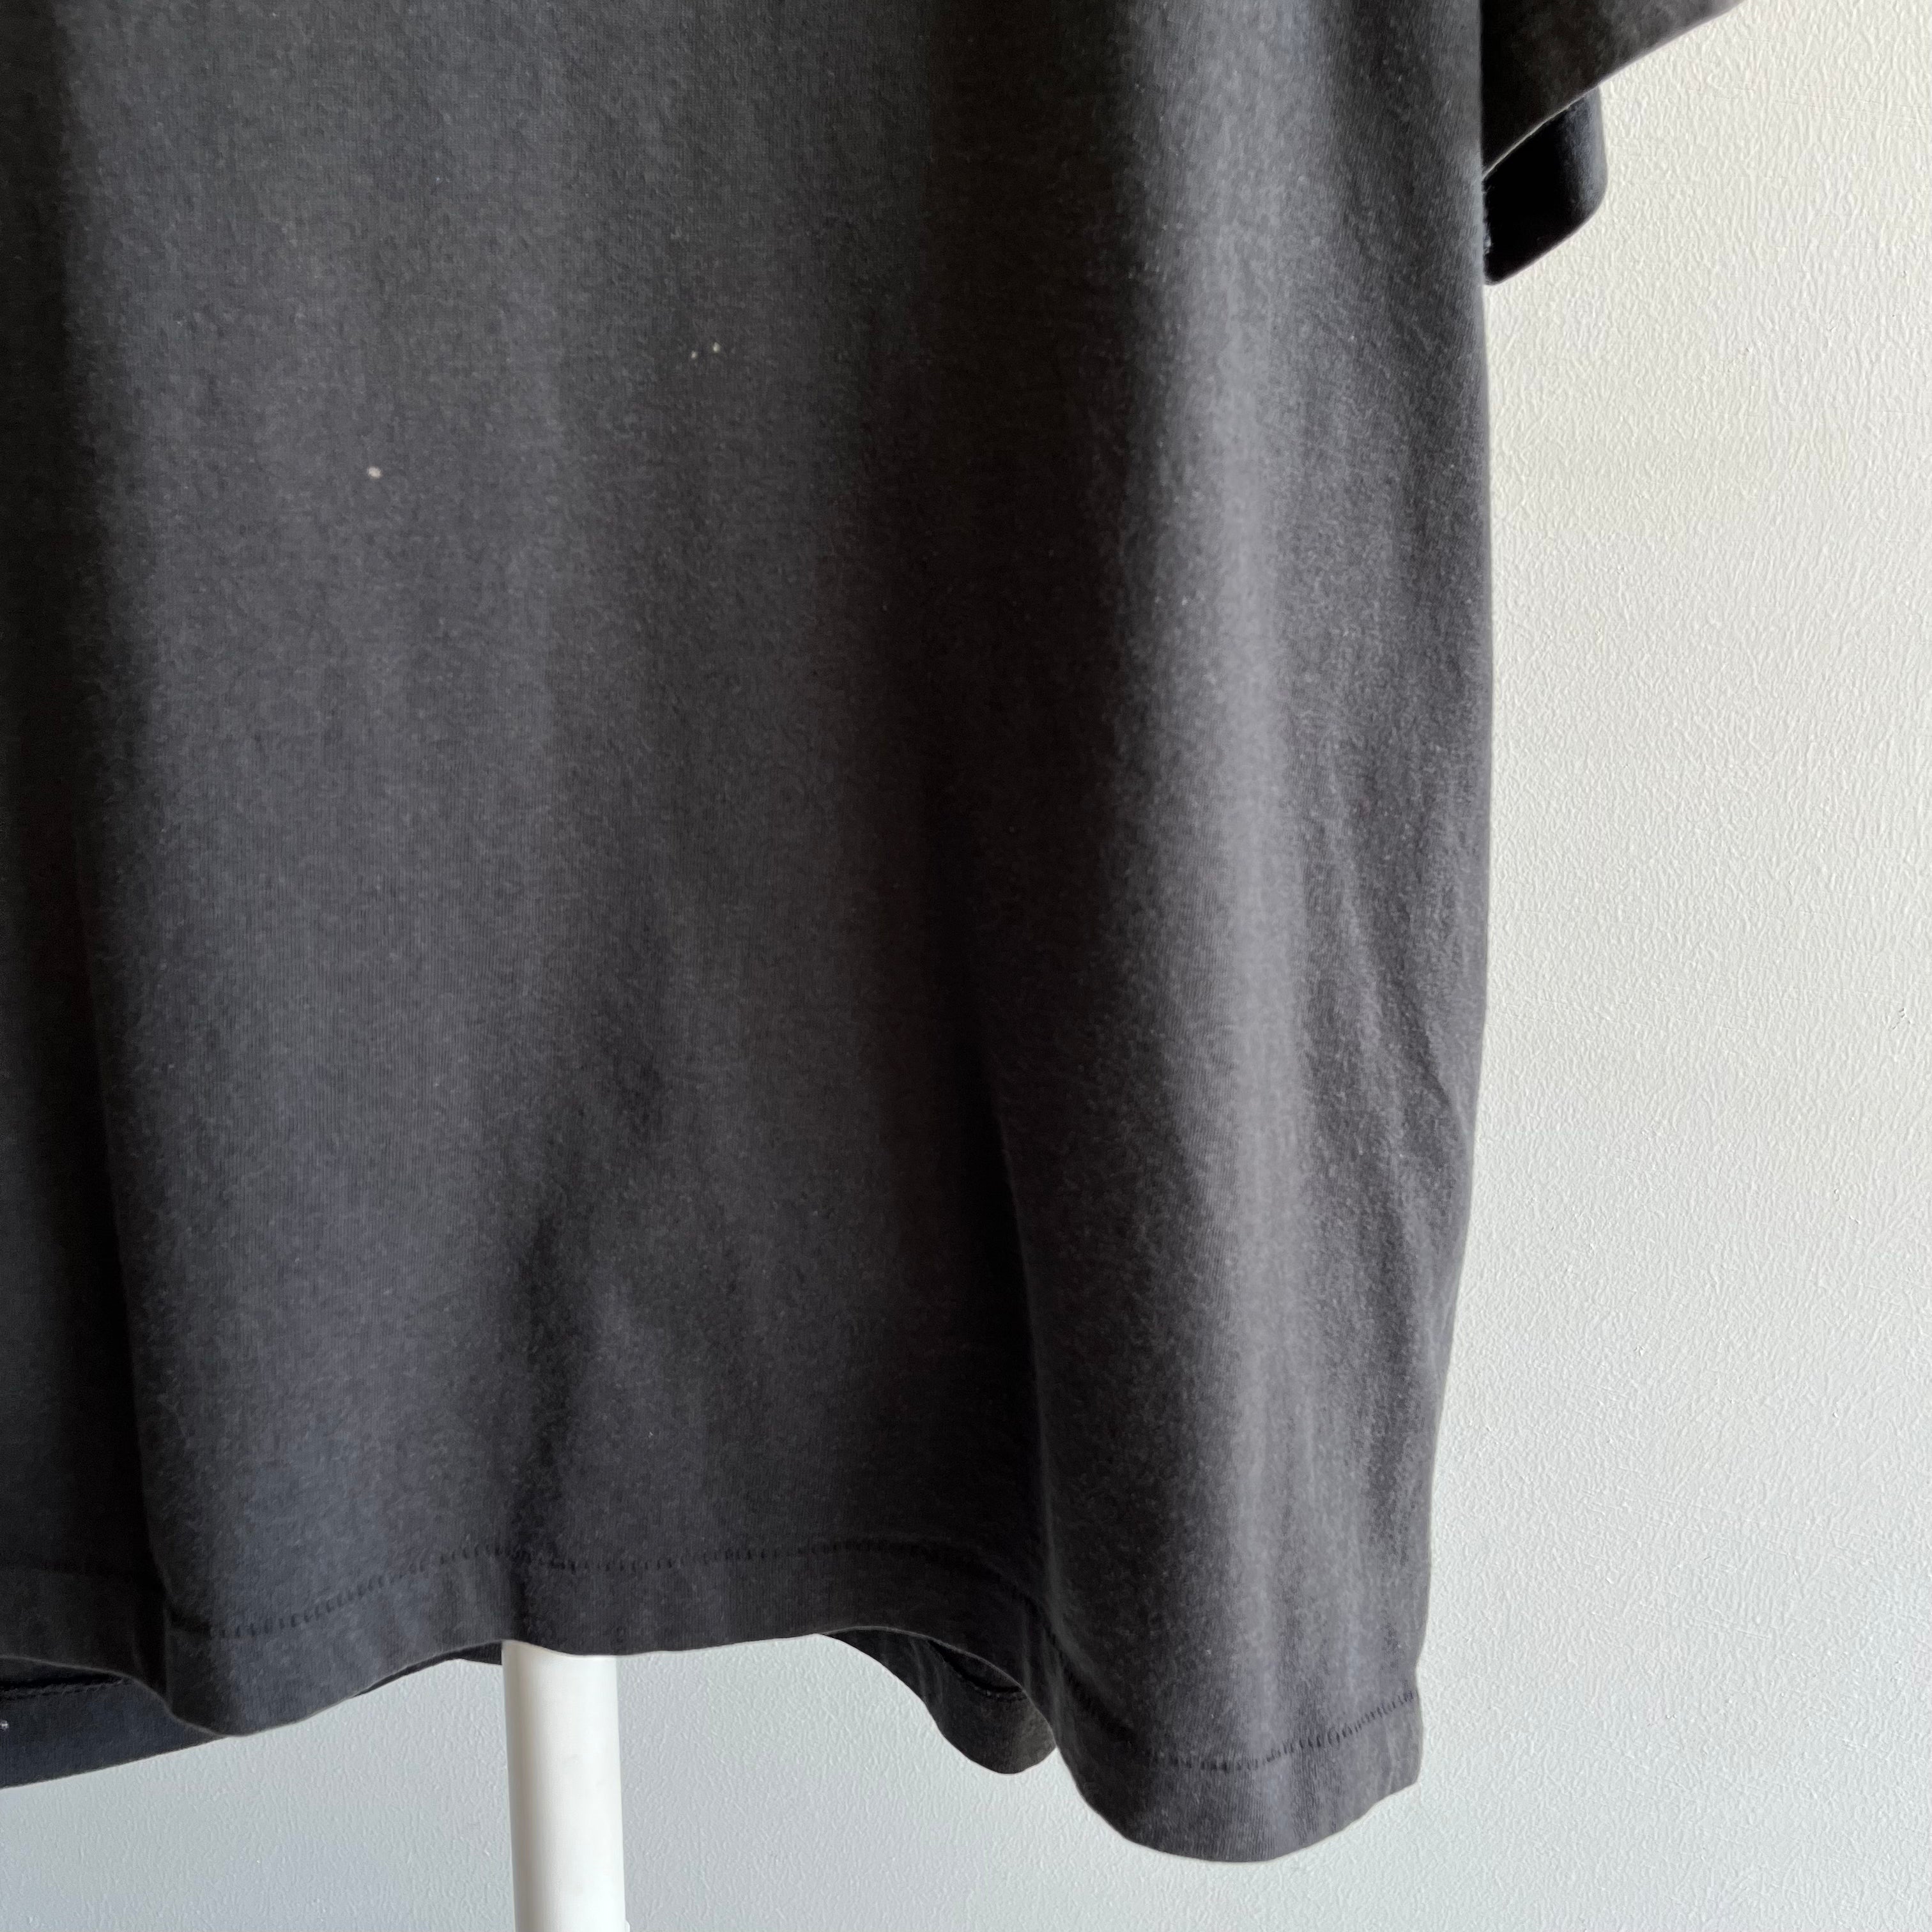 1990s FOTL Faded Blank Black T-Shirt